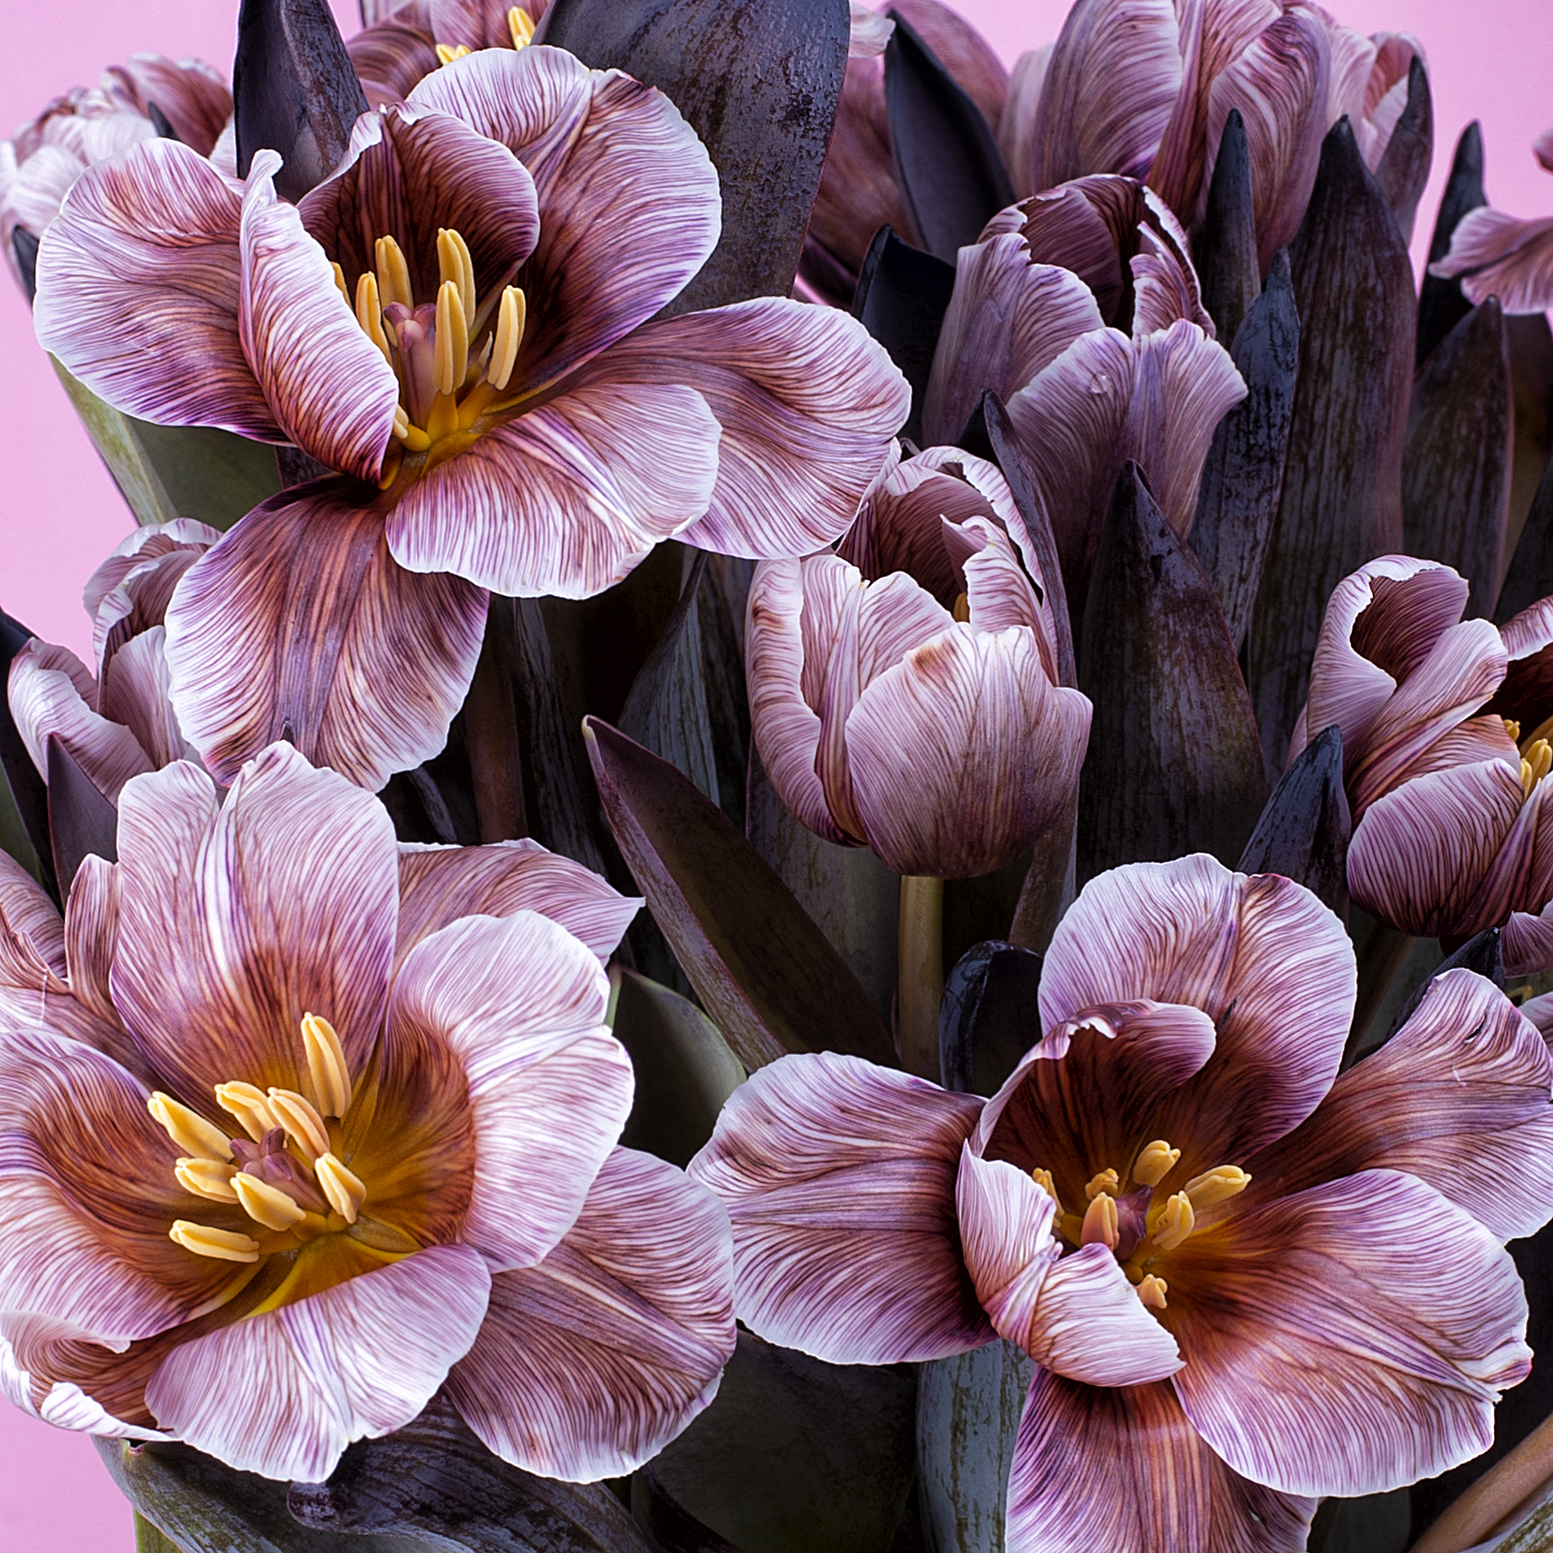 7 unusual flower arrangements for a dream girl, according to Elle Man